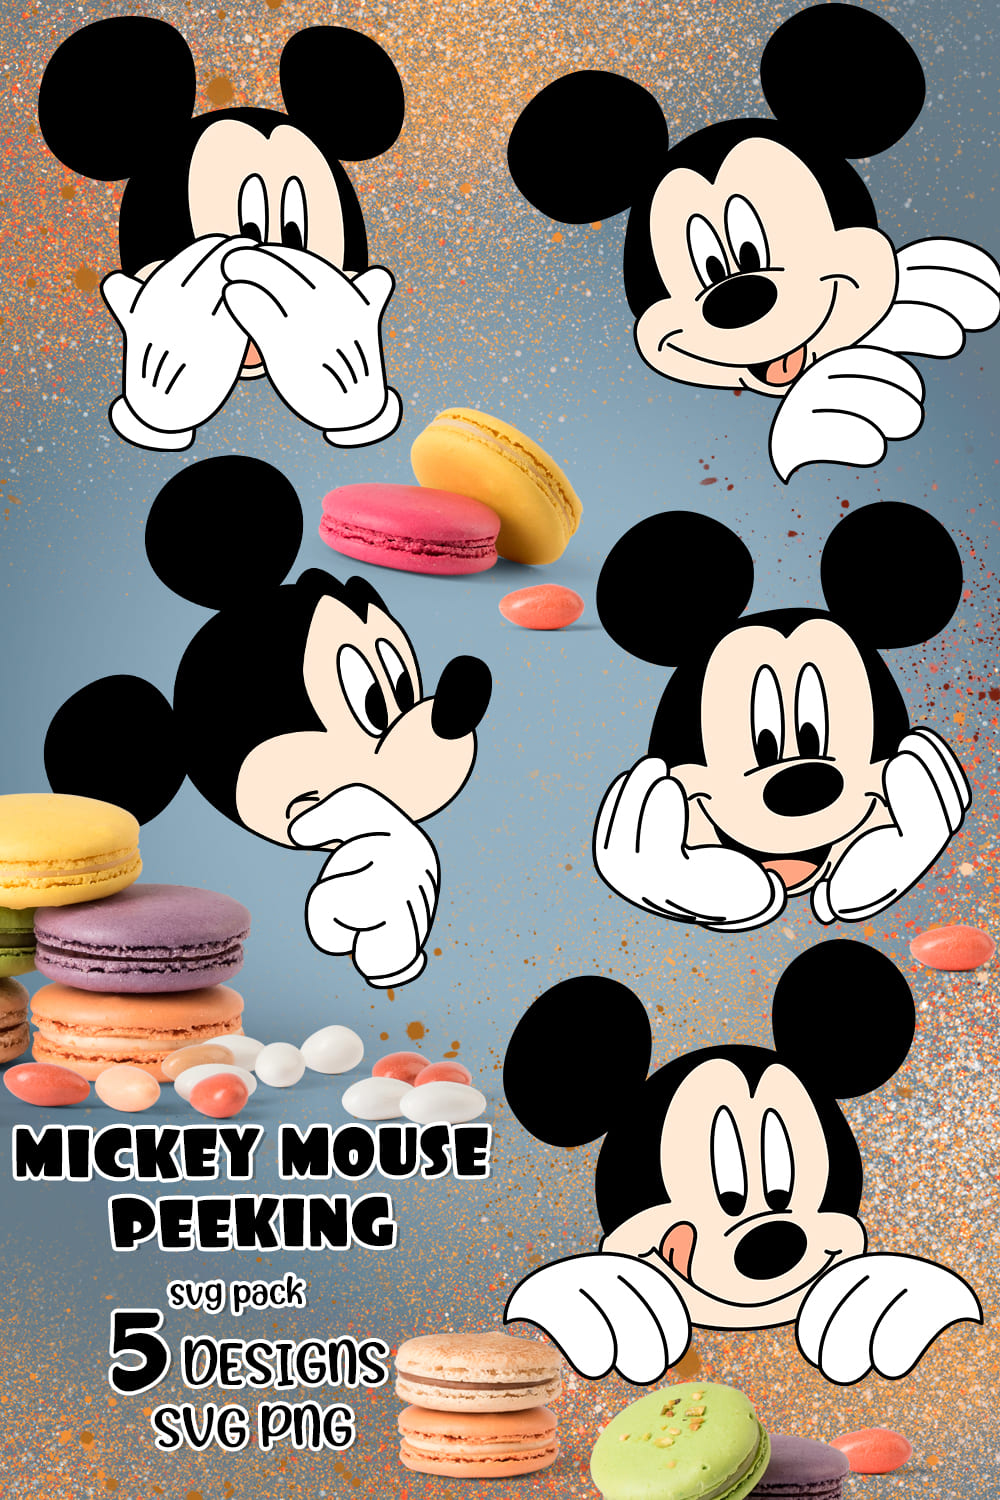 Mickey Mouse Peeking Svg - Pinterest.